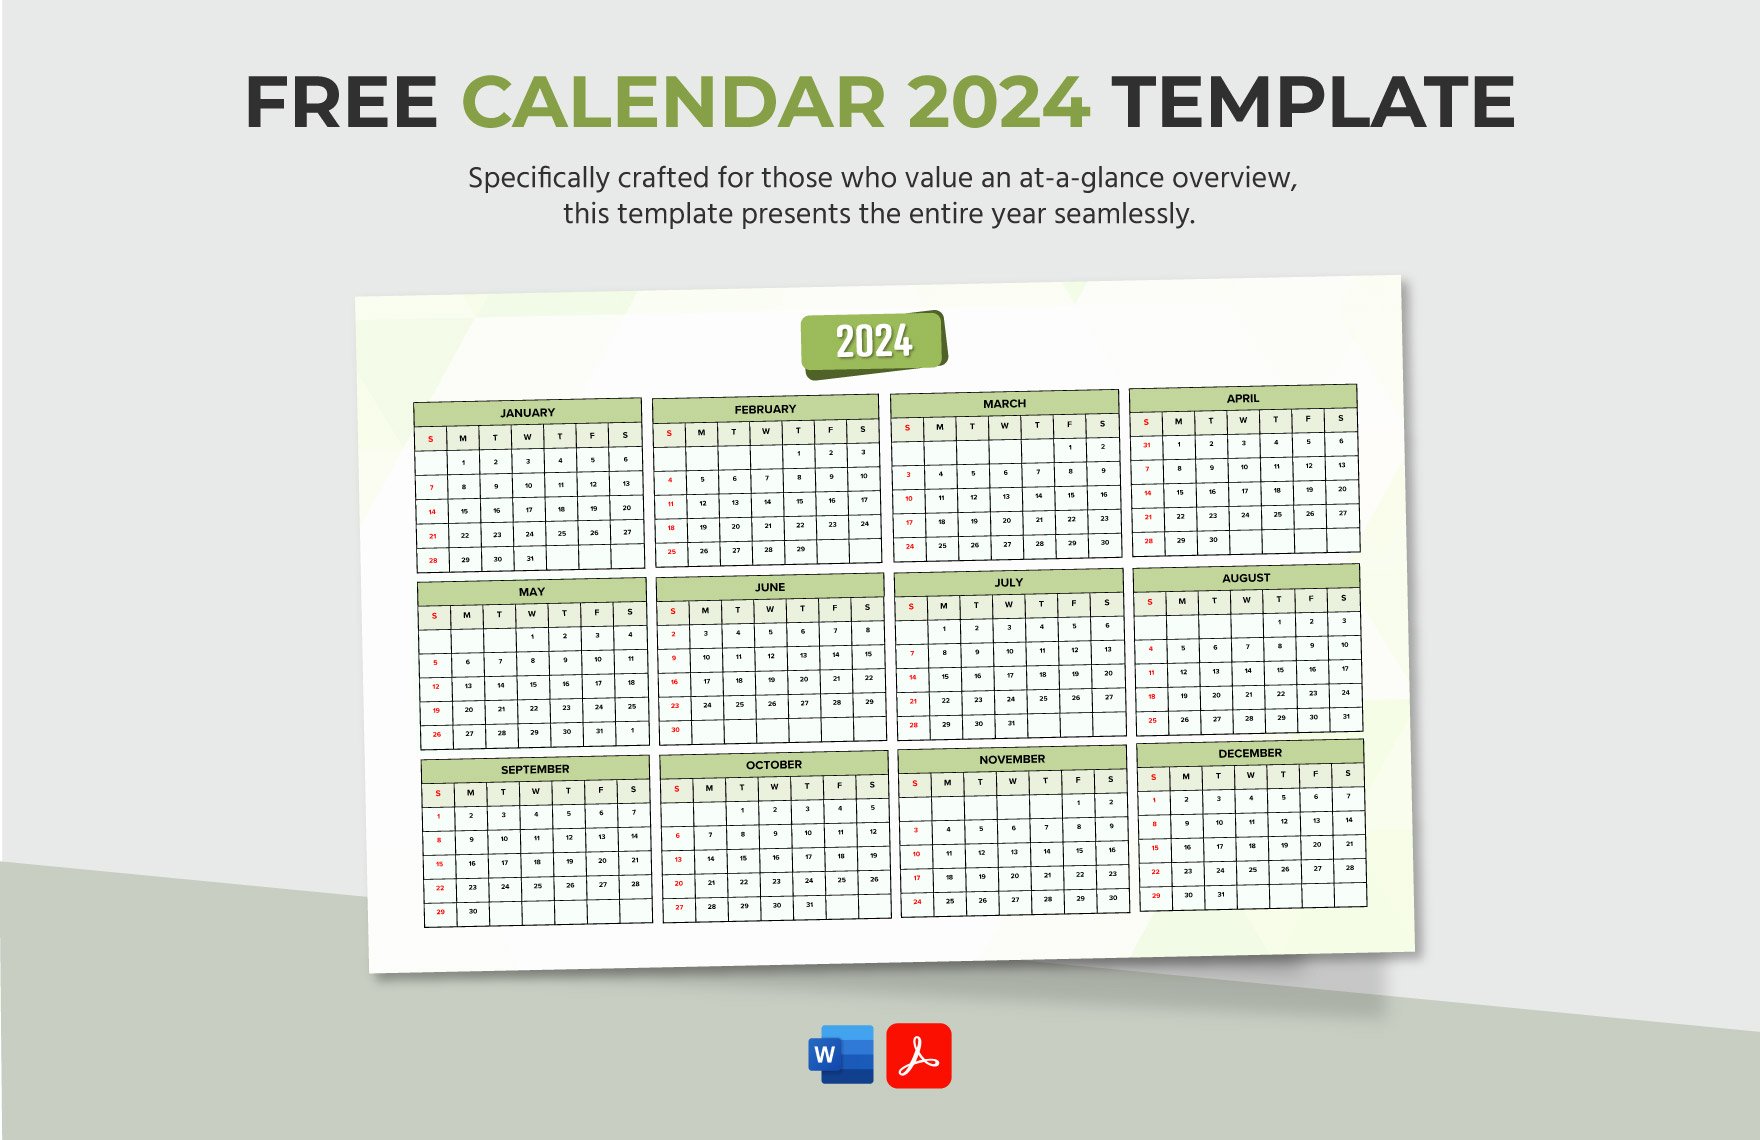 Free Calendar 2024 Template Download in Word, Google Docs, PDF